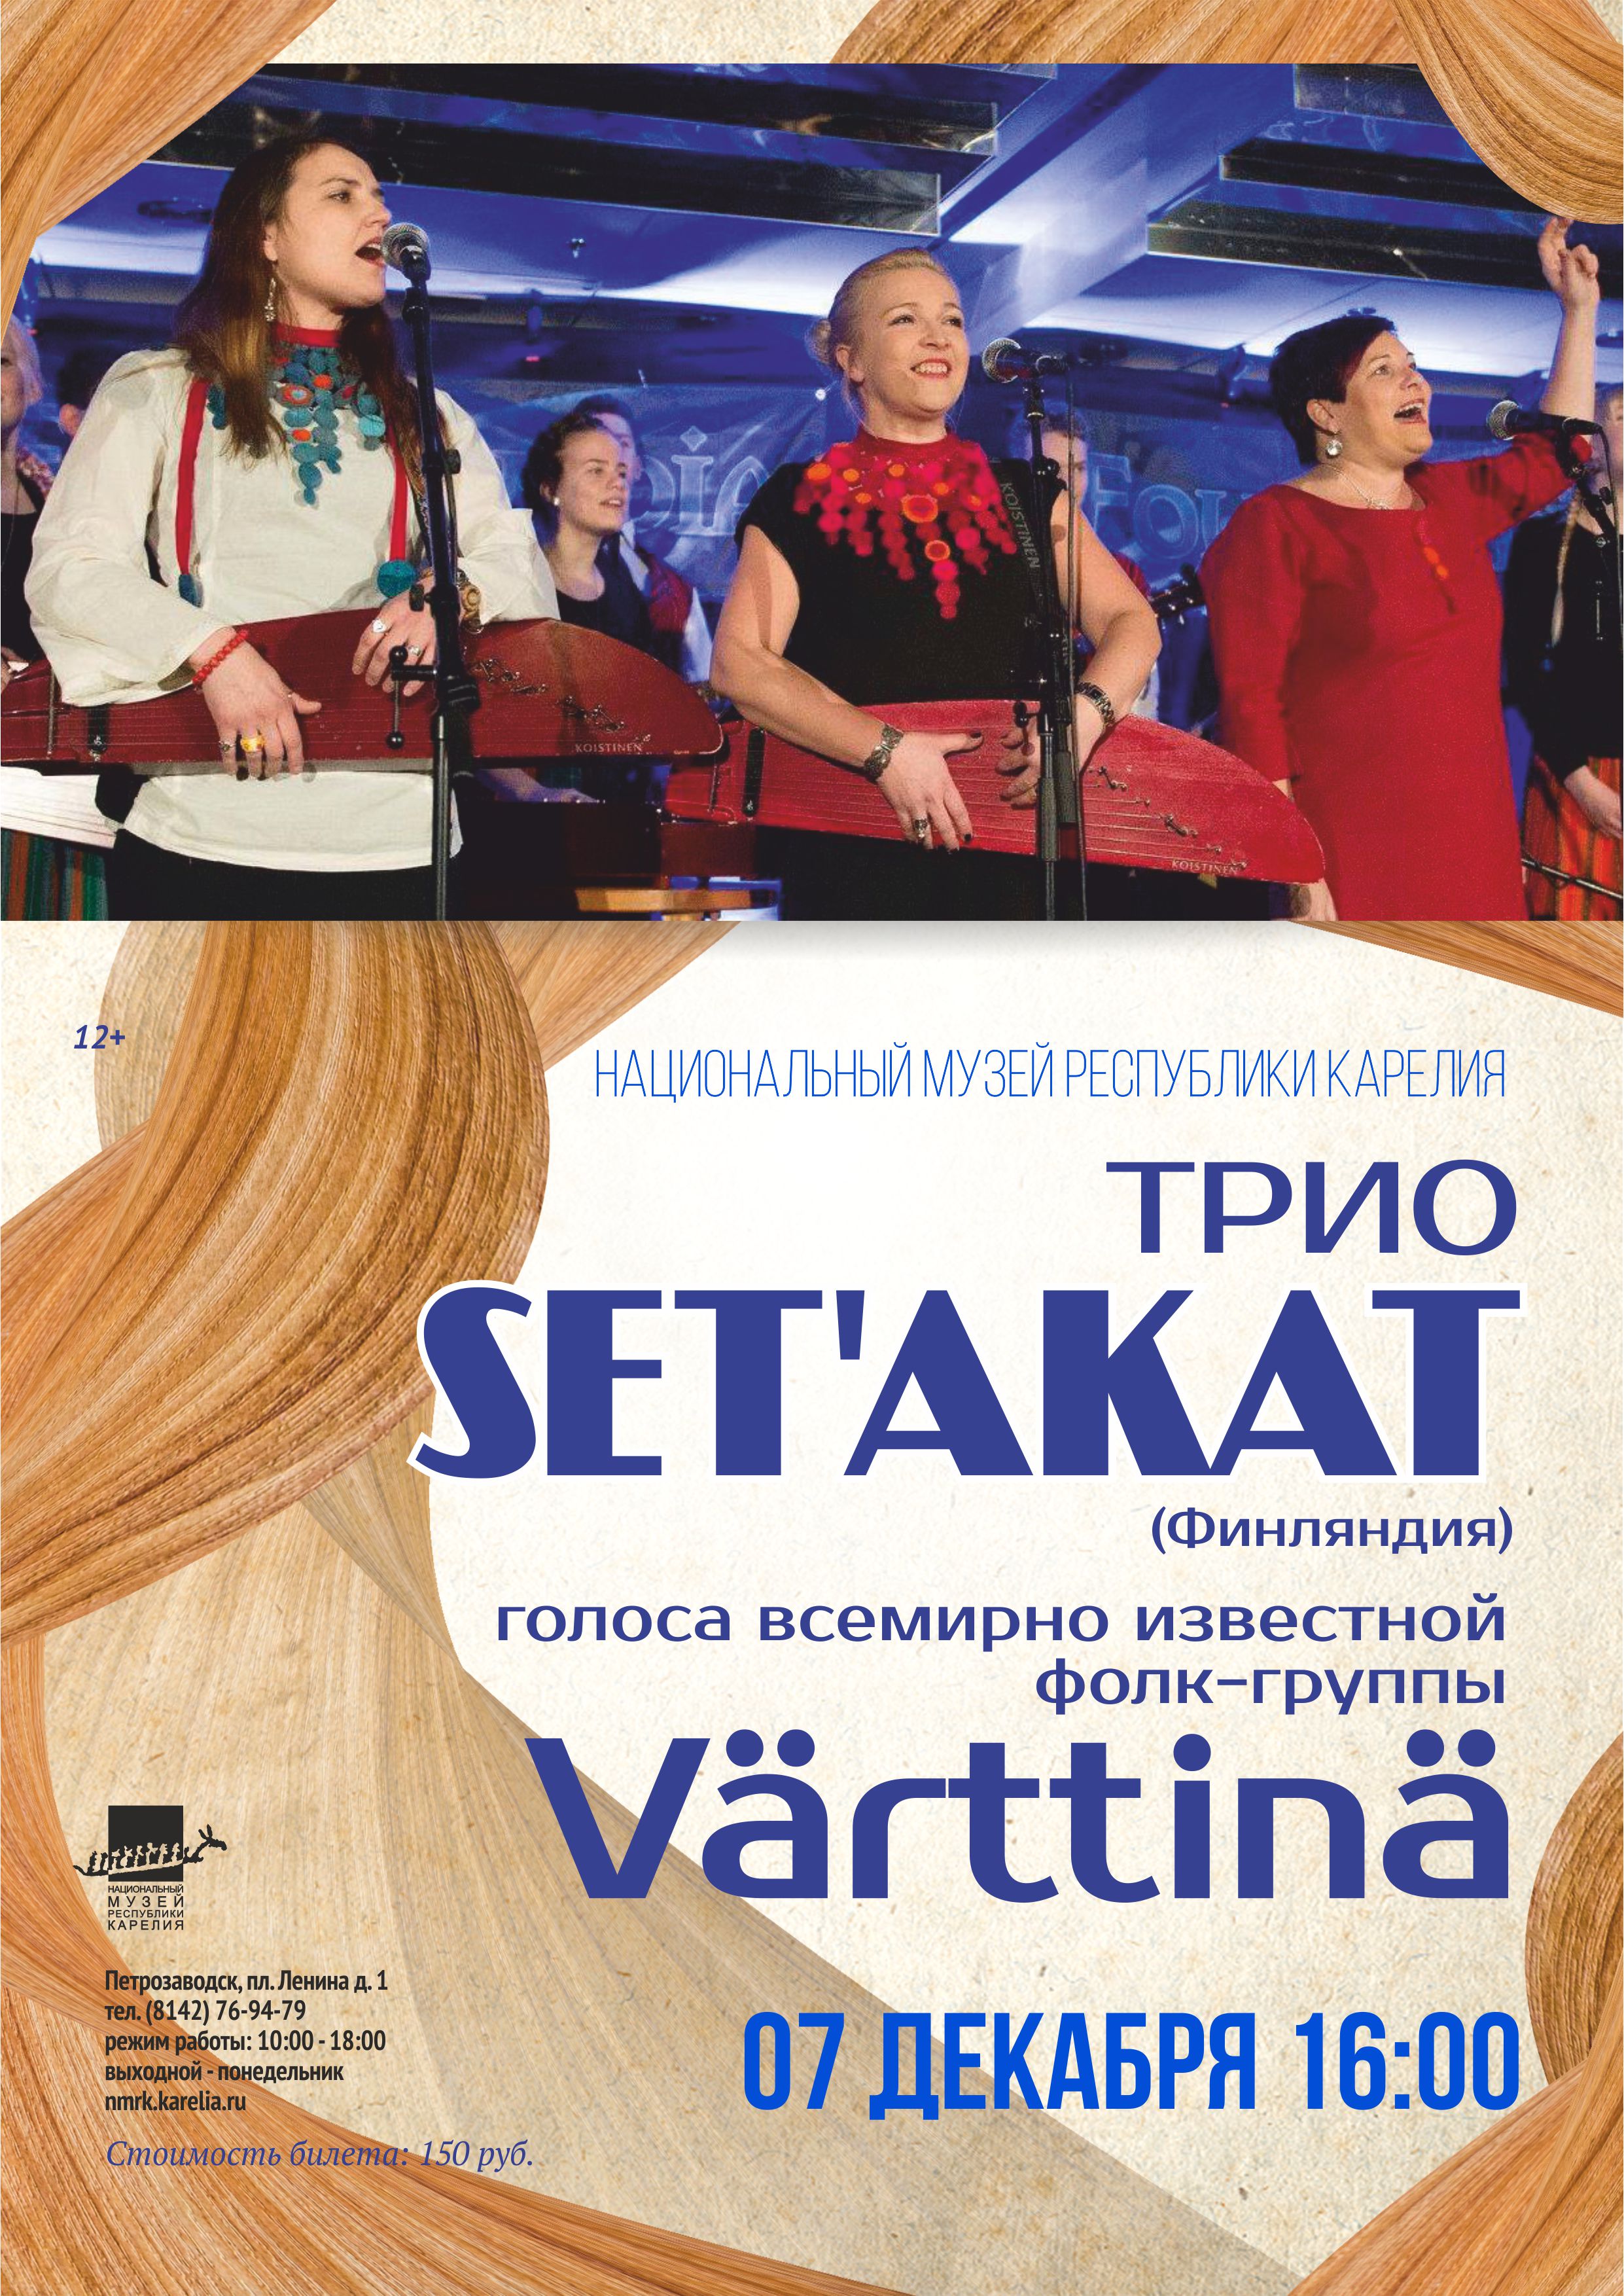 Концерт финского Трио Set’akat (Сетакат).